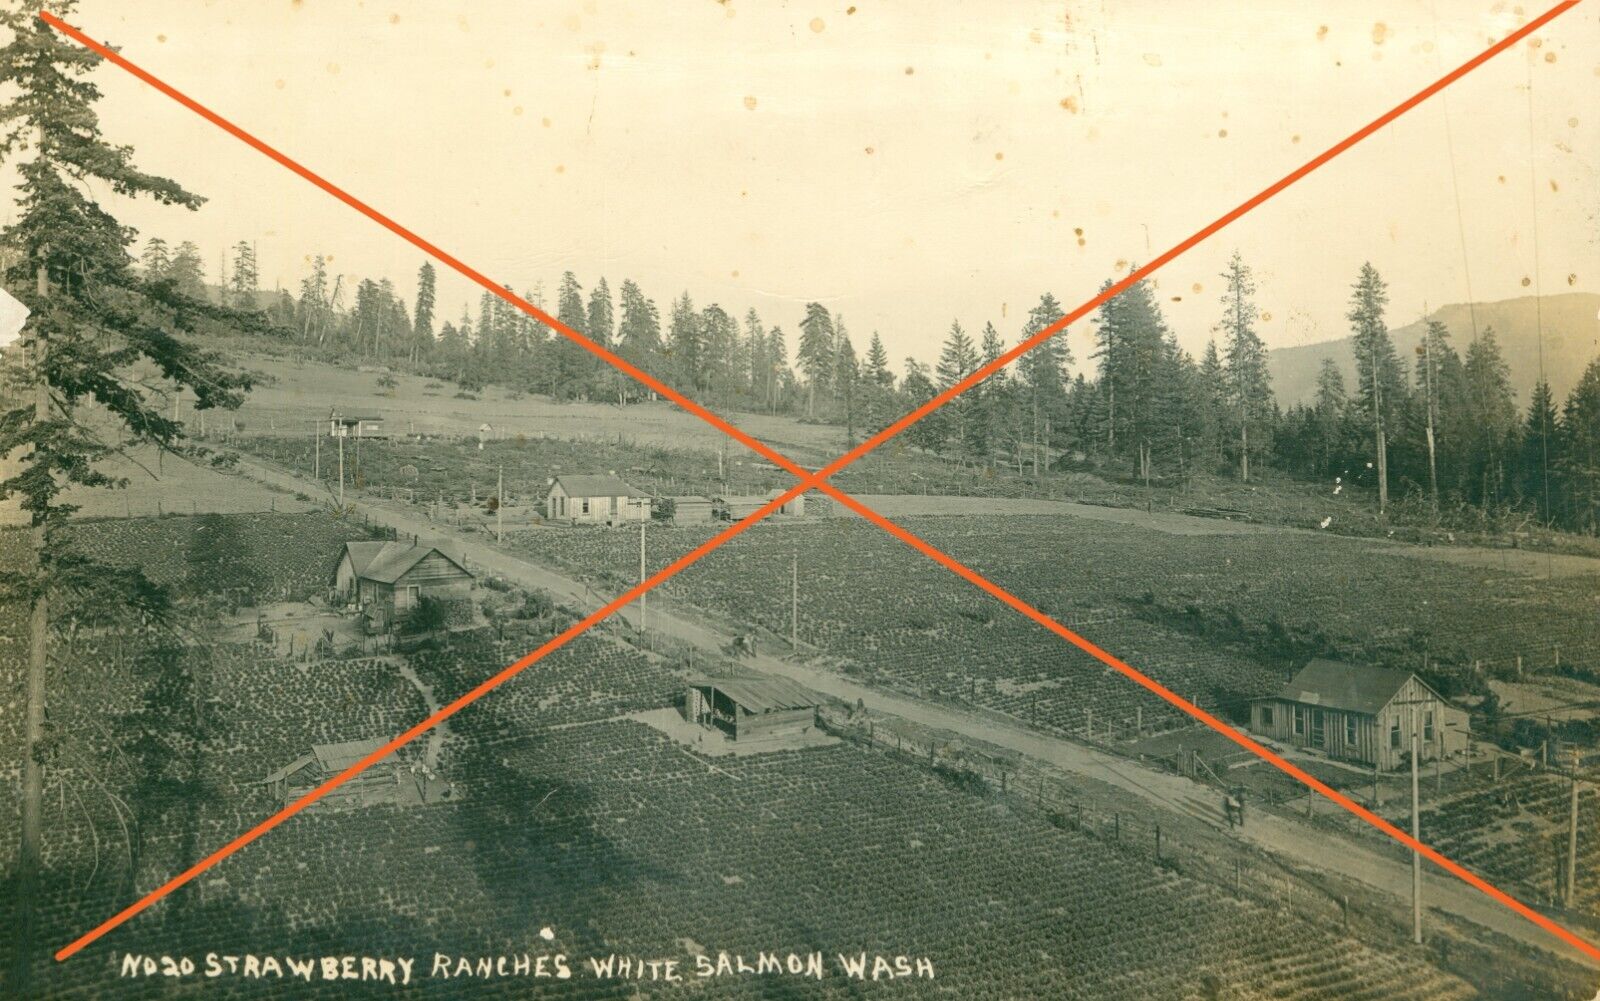 No. 20 Strawberry Ranches White Salmon WA Klickitat County approx 1913